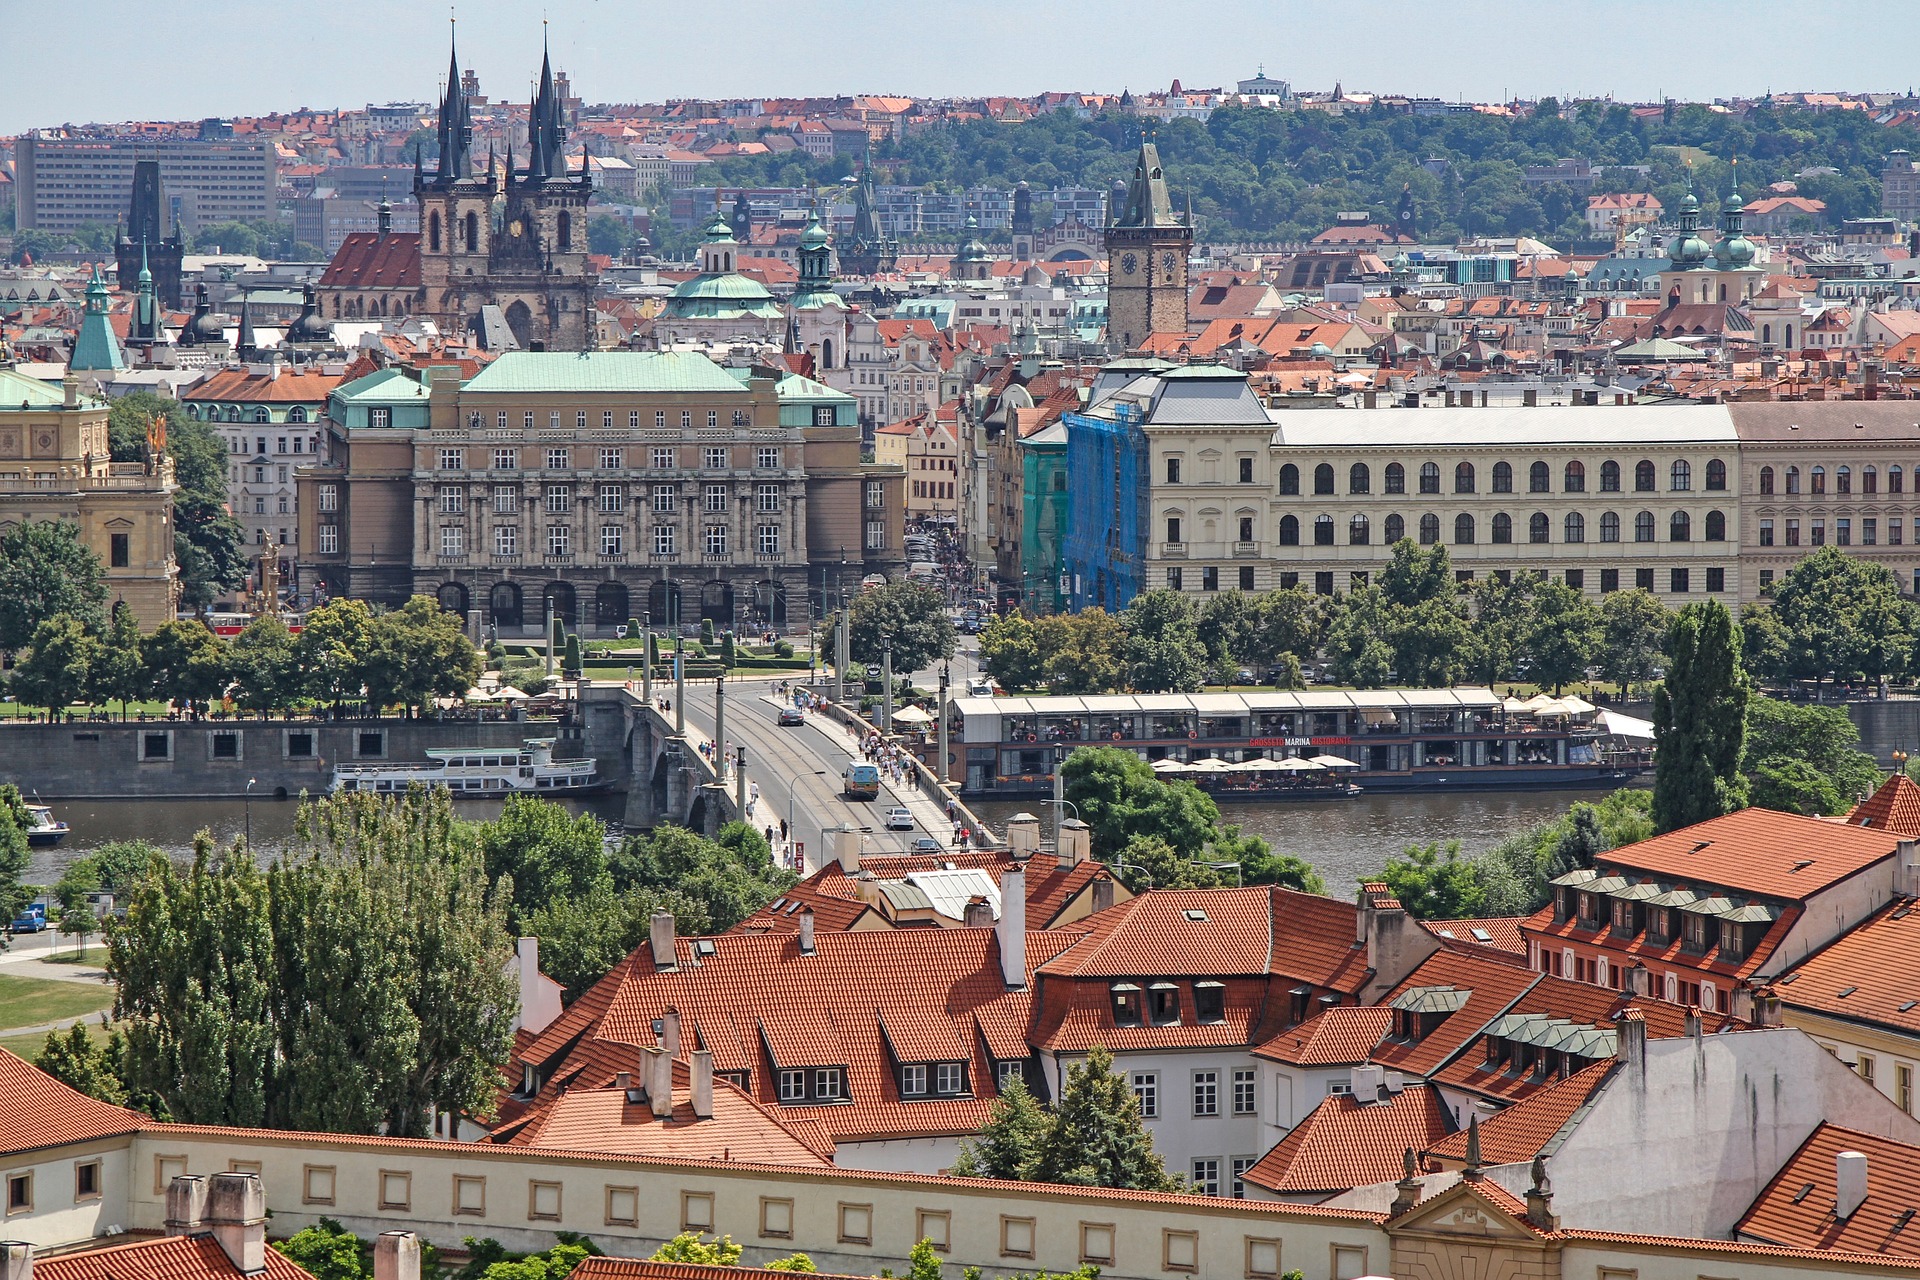 prague czech republic - Travel Contests: August 31, 2016 - Czech Republic, World Series, & more